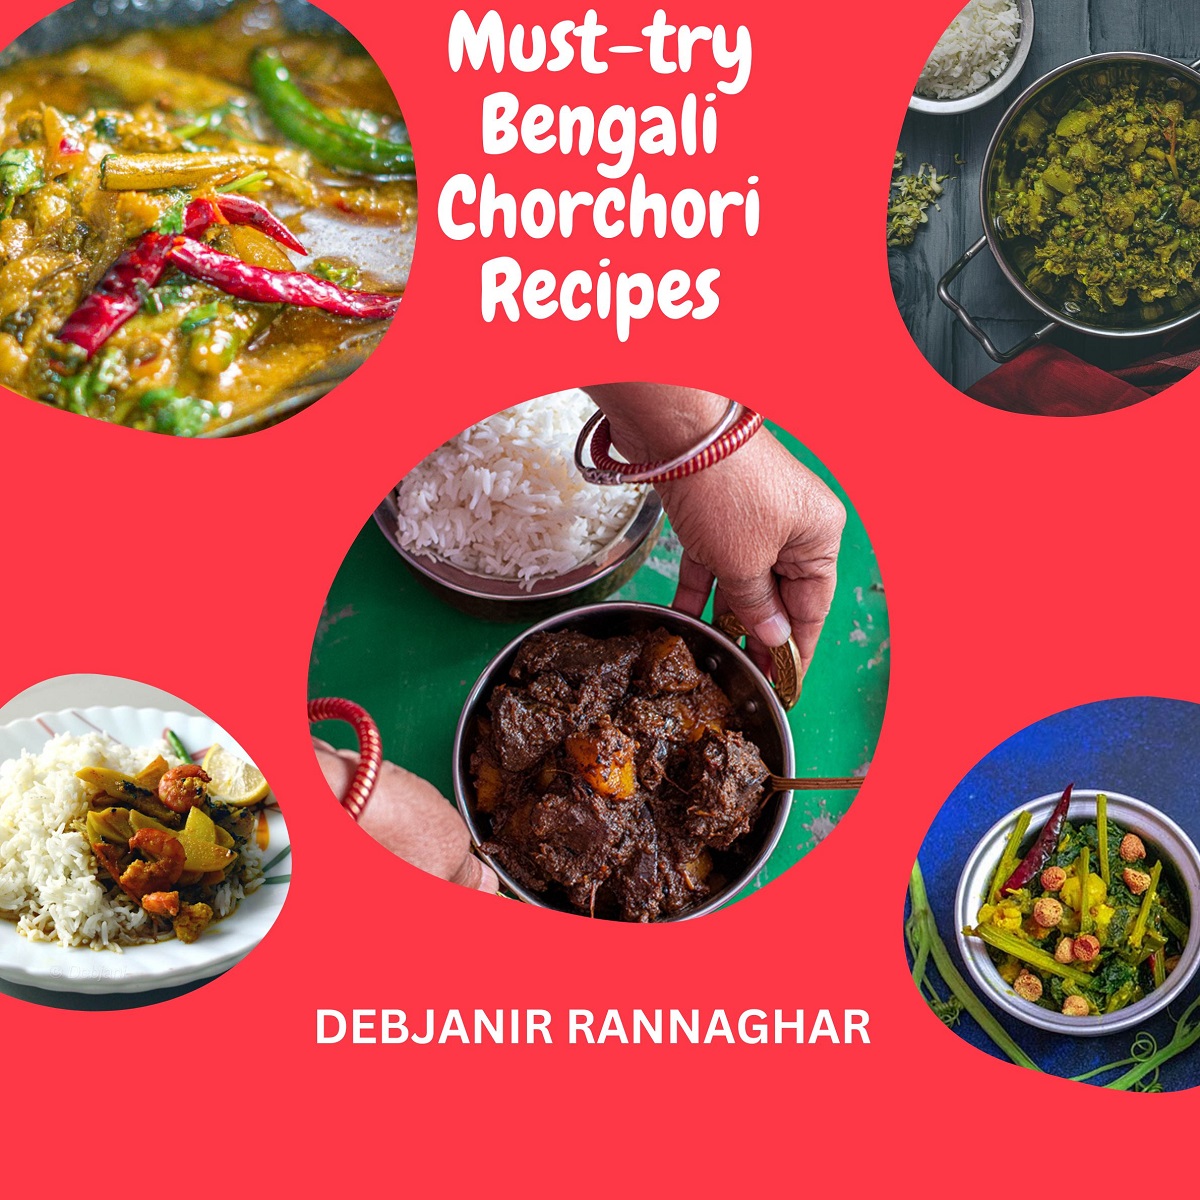 %Must-try Bengali Chorchori Recipes Debjanir Rannaghar